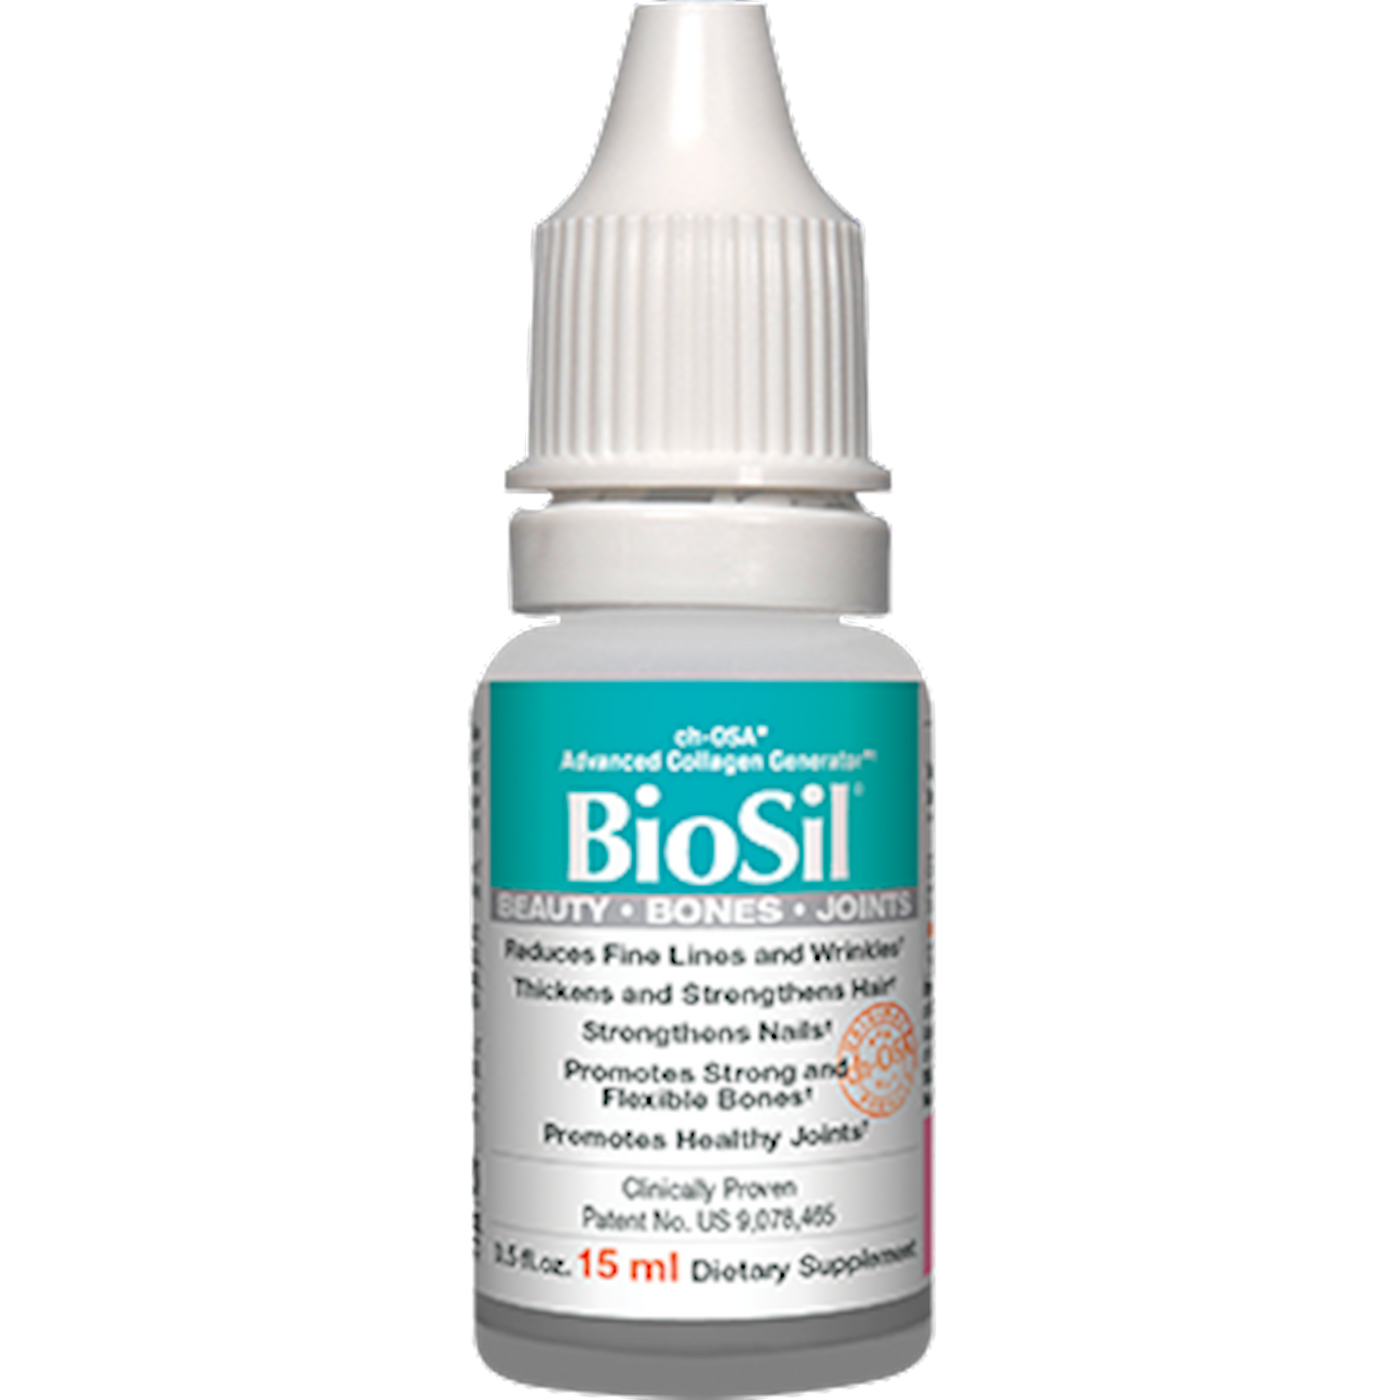 BioSil Beauty, Bones, Joints 0.5 fl oz Curated Wellness